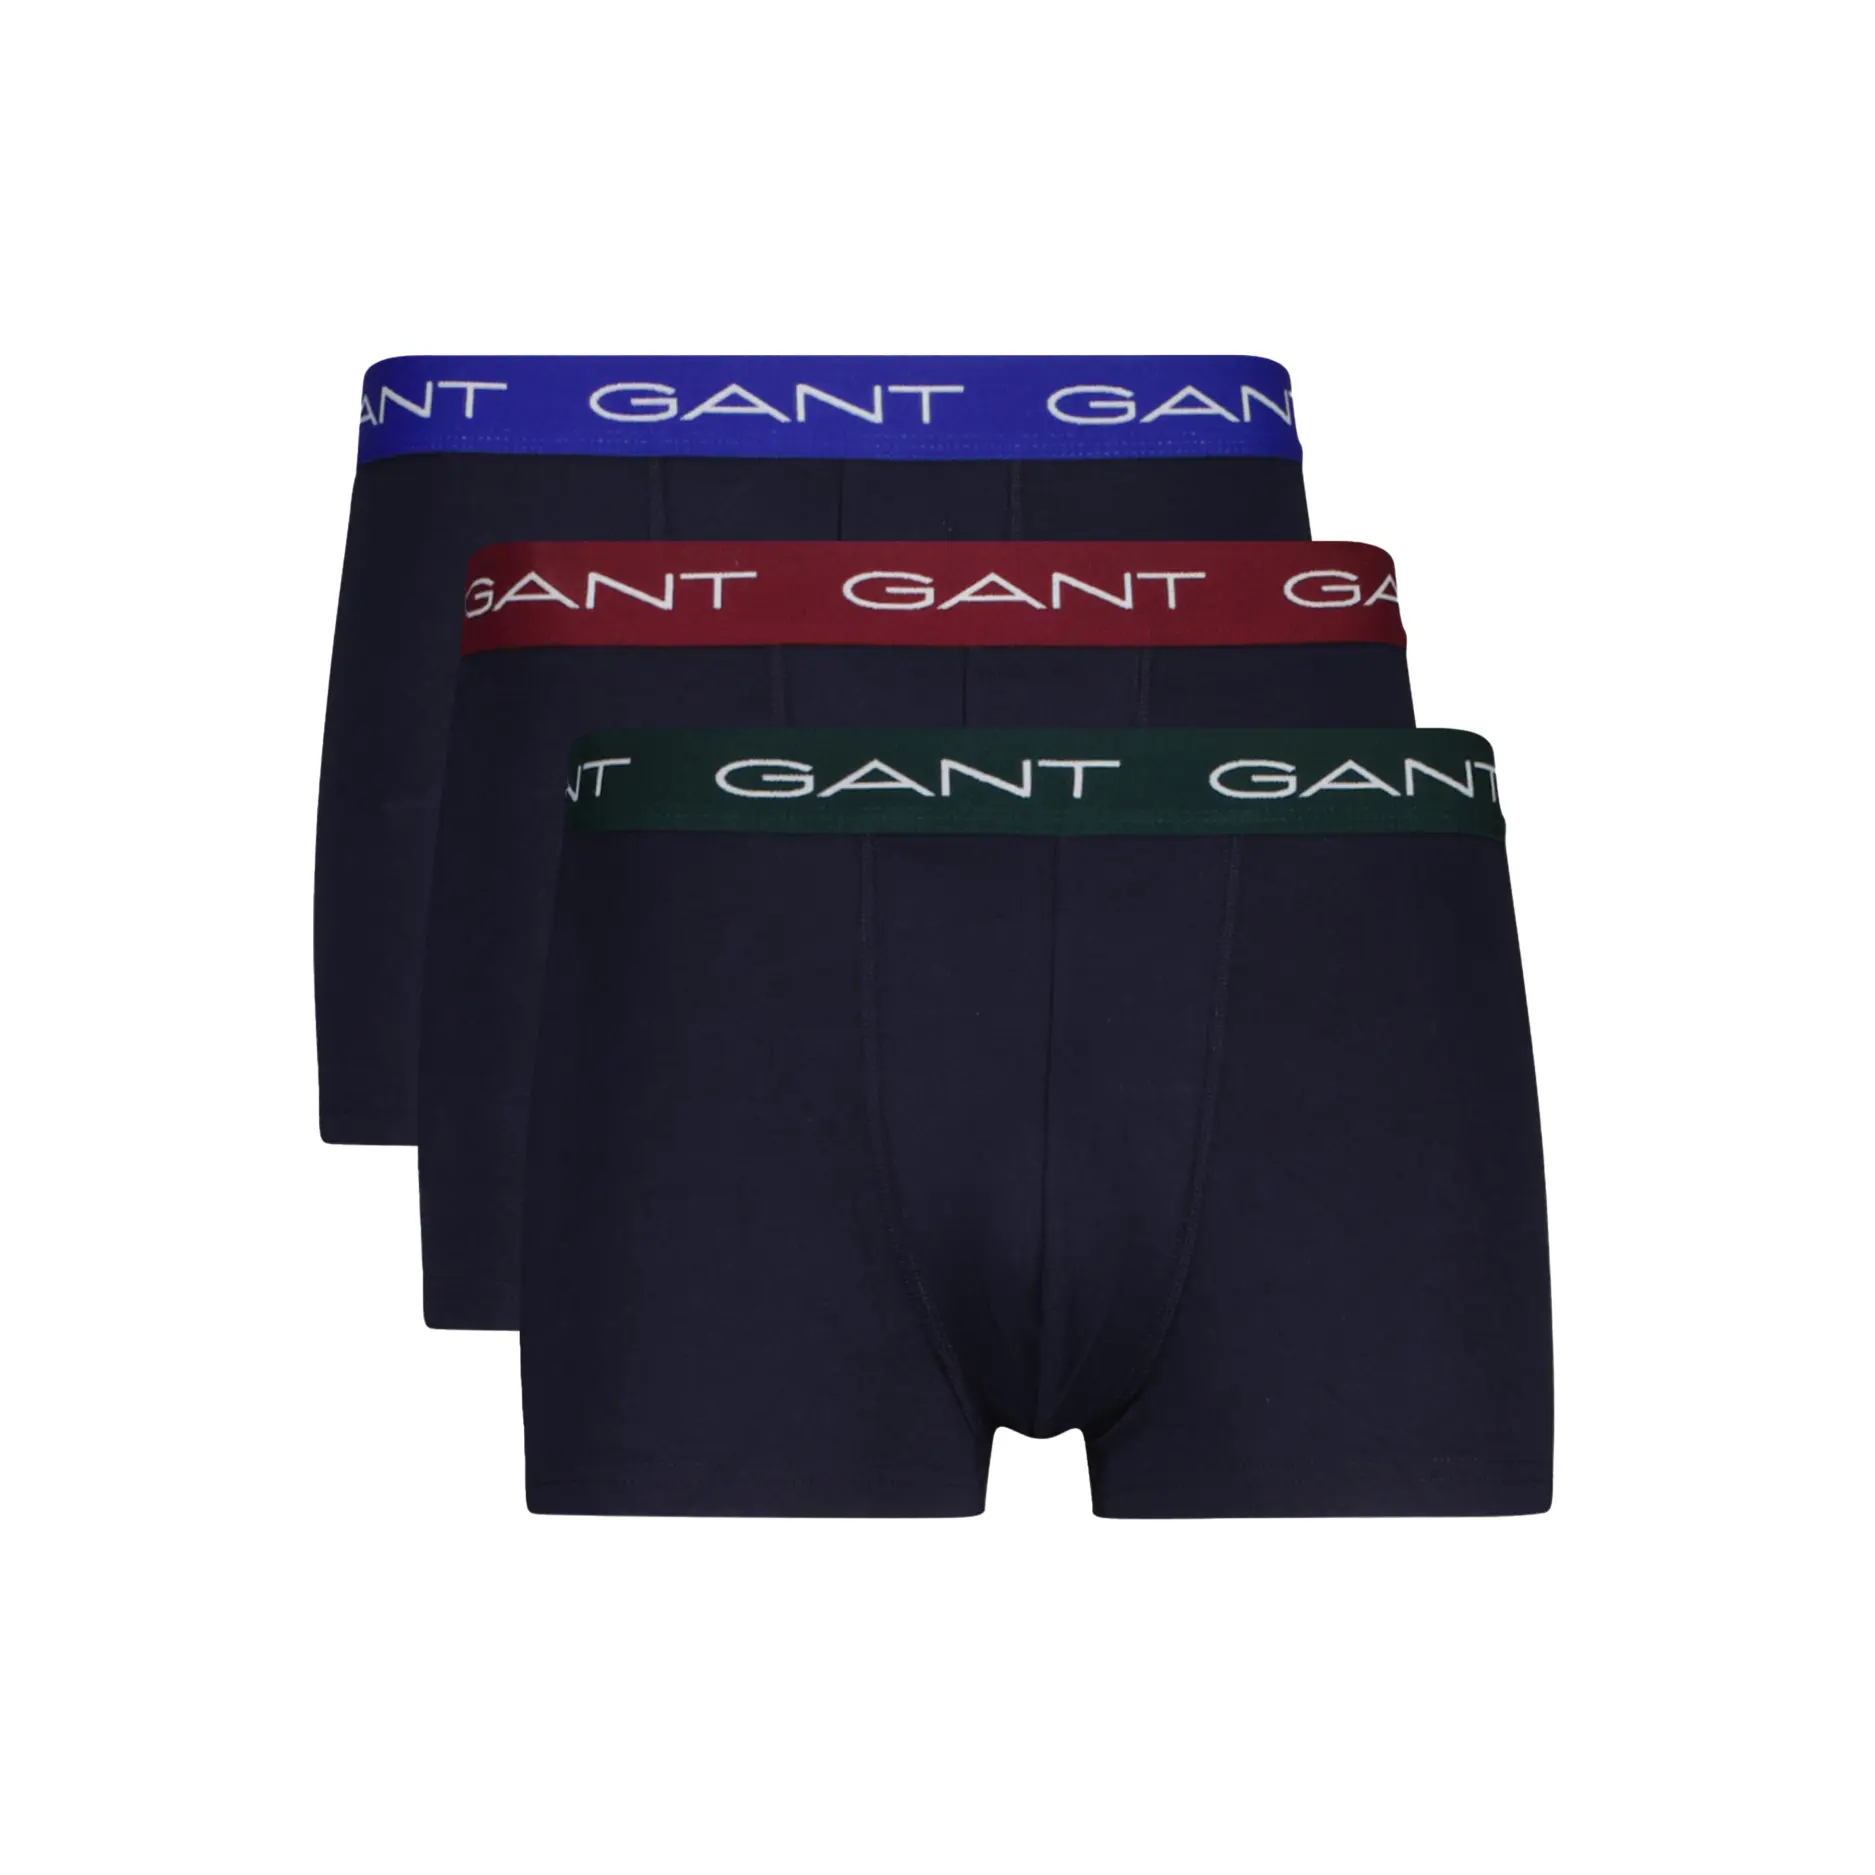 Gant_trunk-3-pack-tummanininen_202303-902333003-604